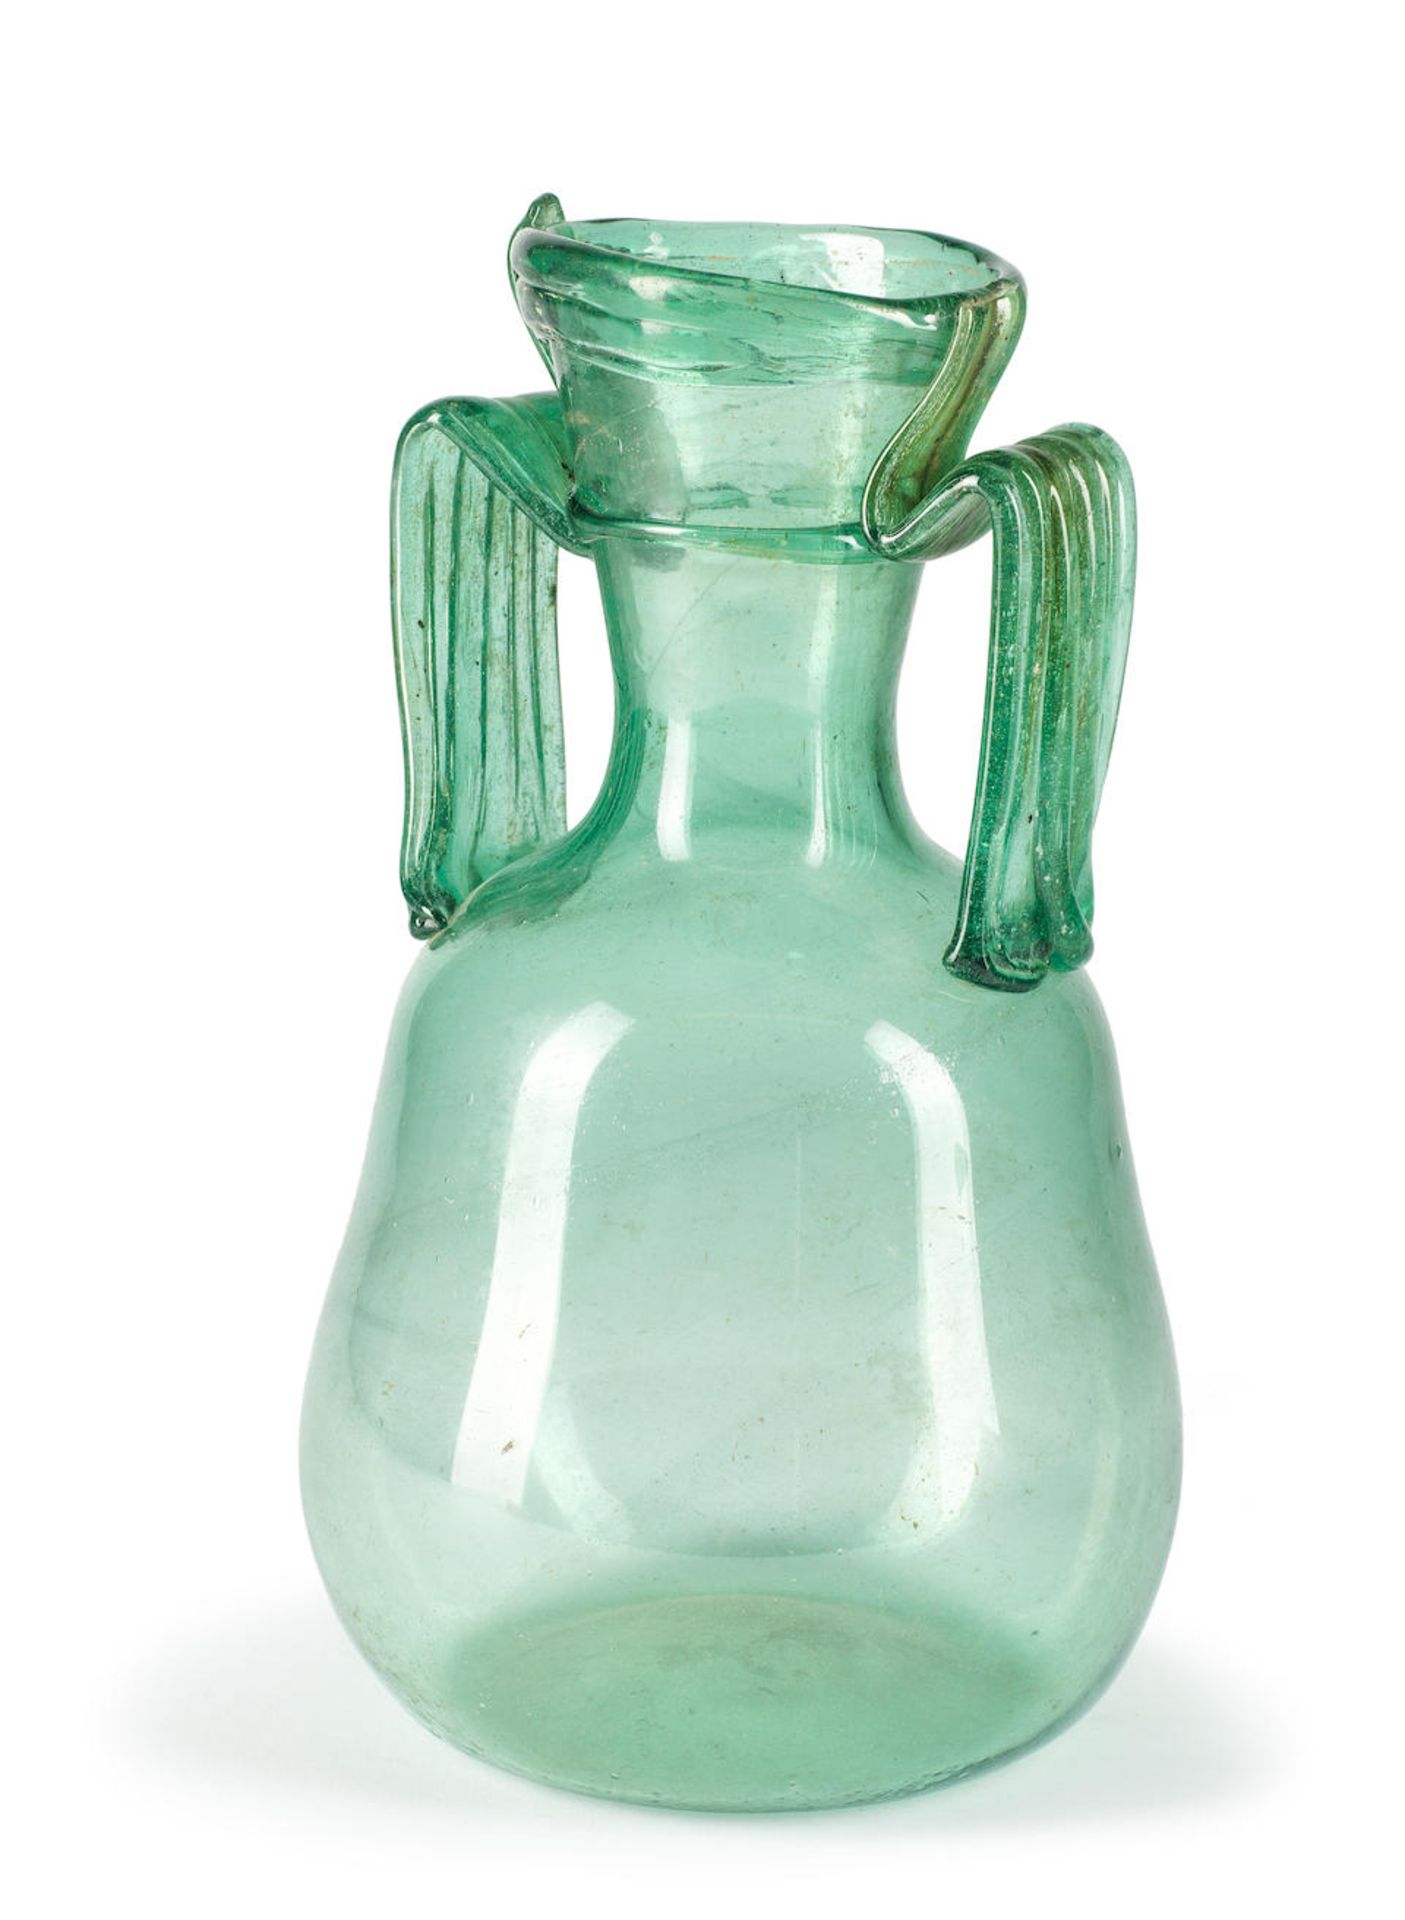 A large Roman green glass amphora